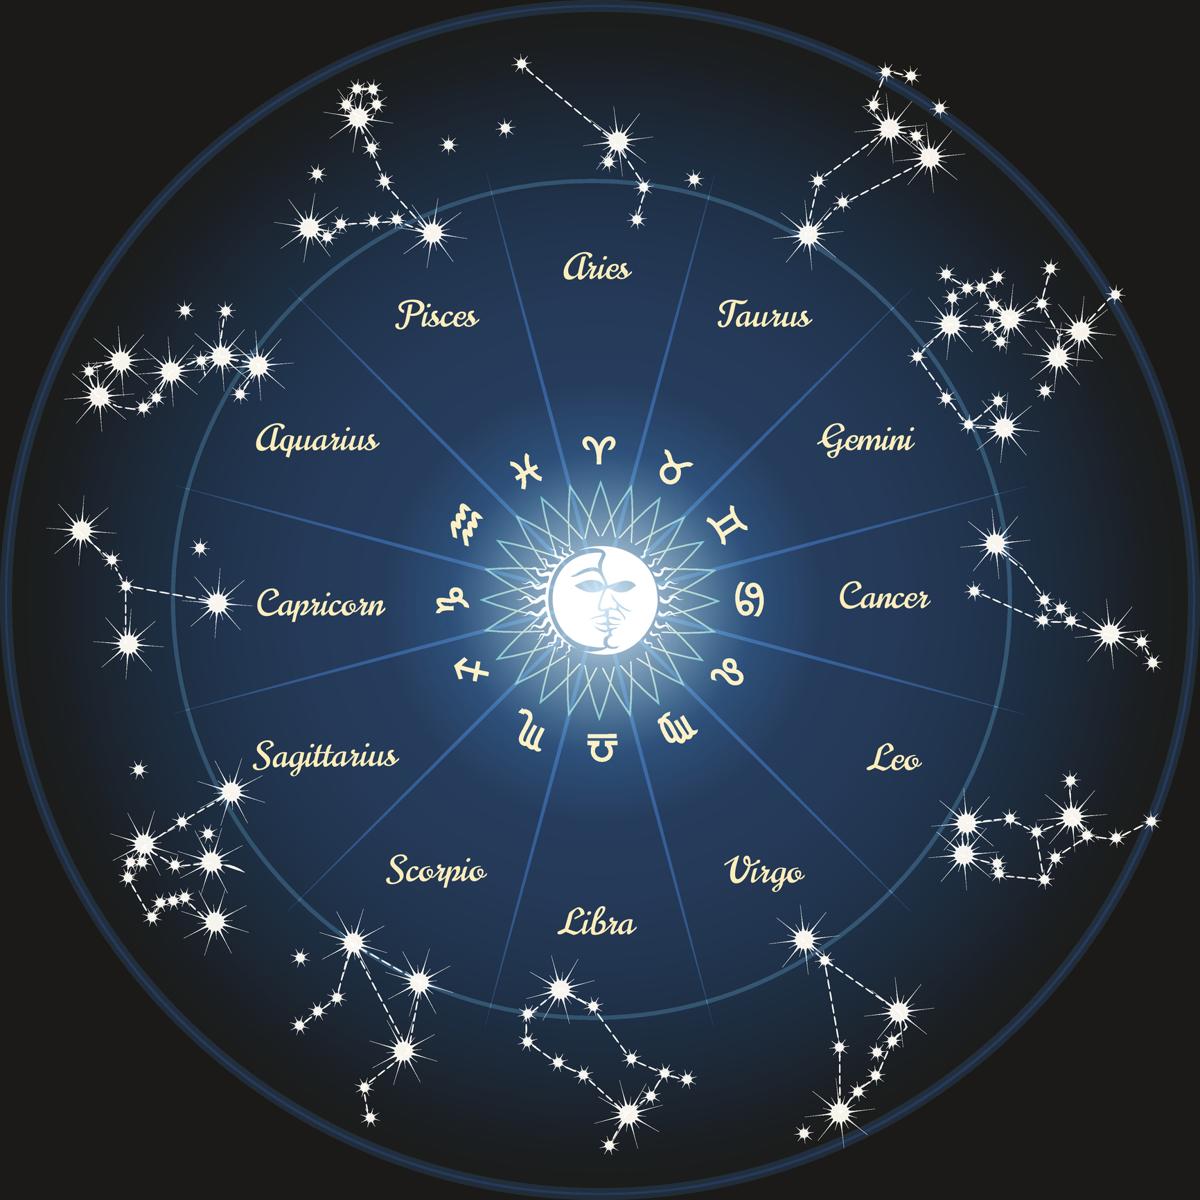 Zodiac Constellations Chart